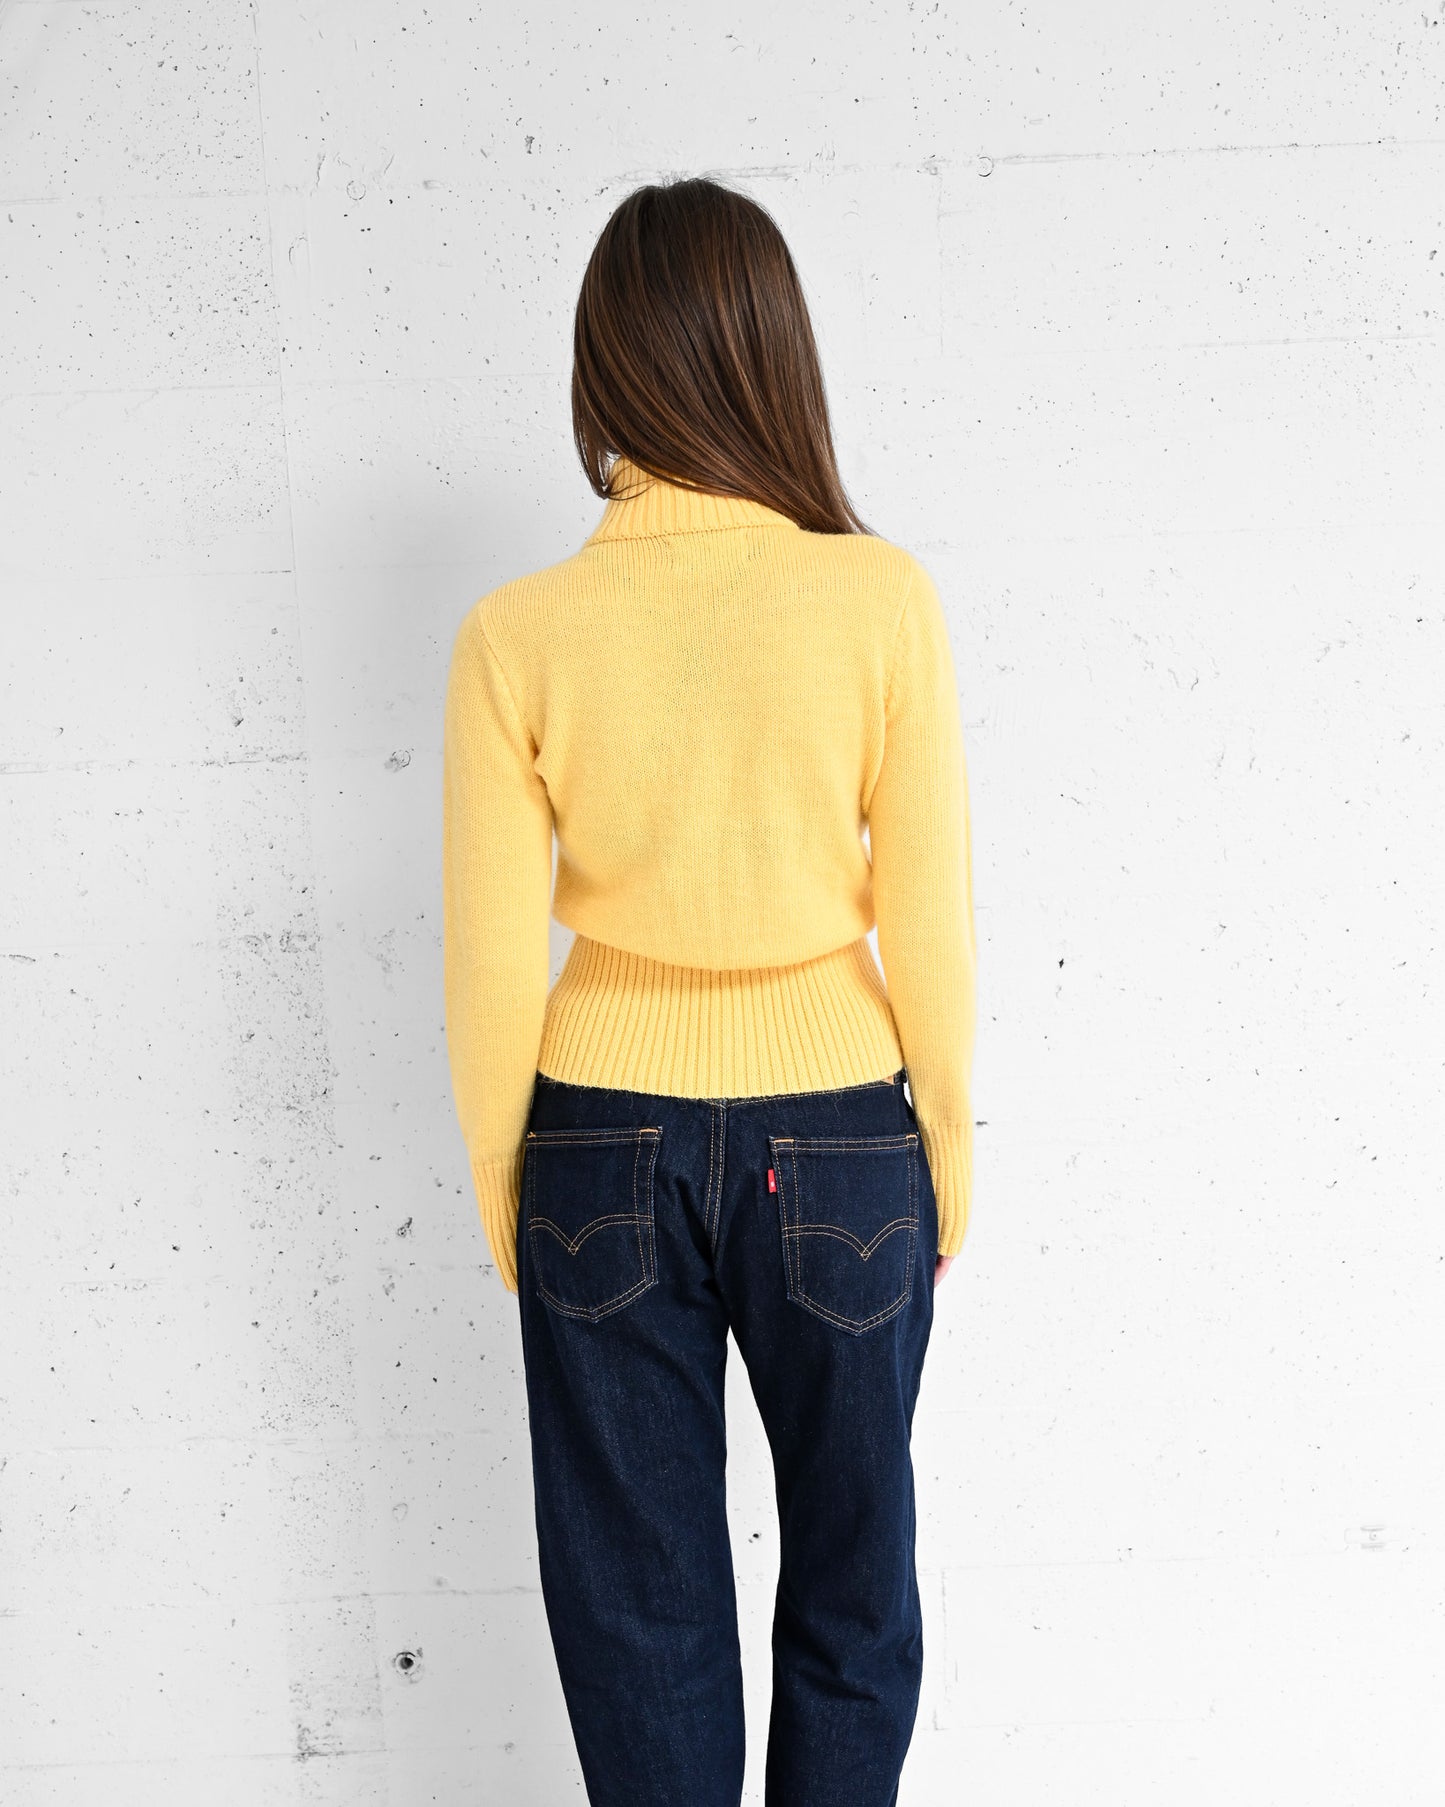 Yellow Alpaca Zip Up Sweater (S-M)